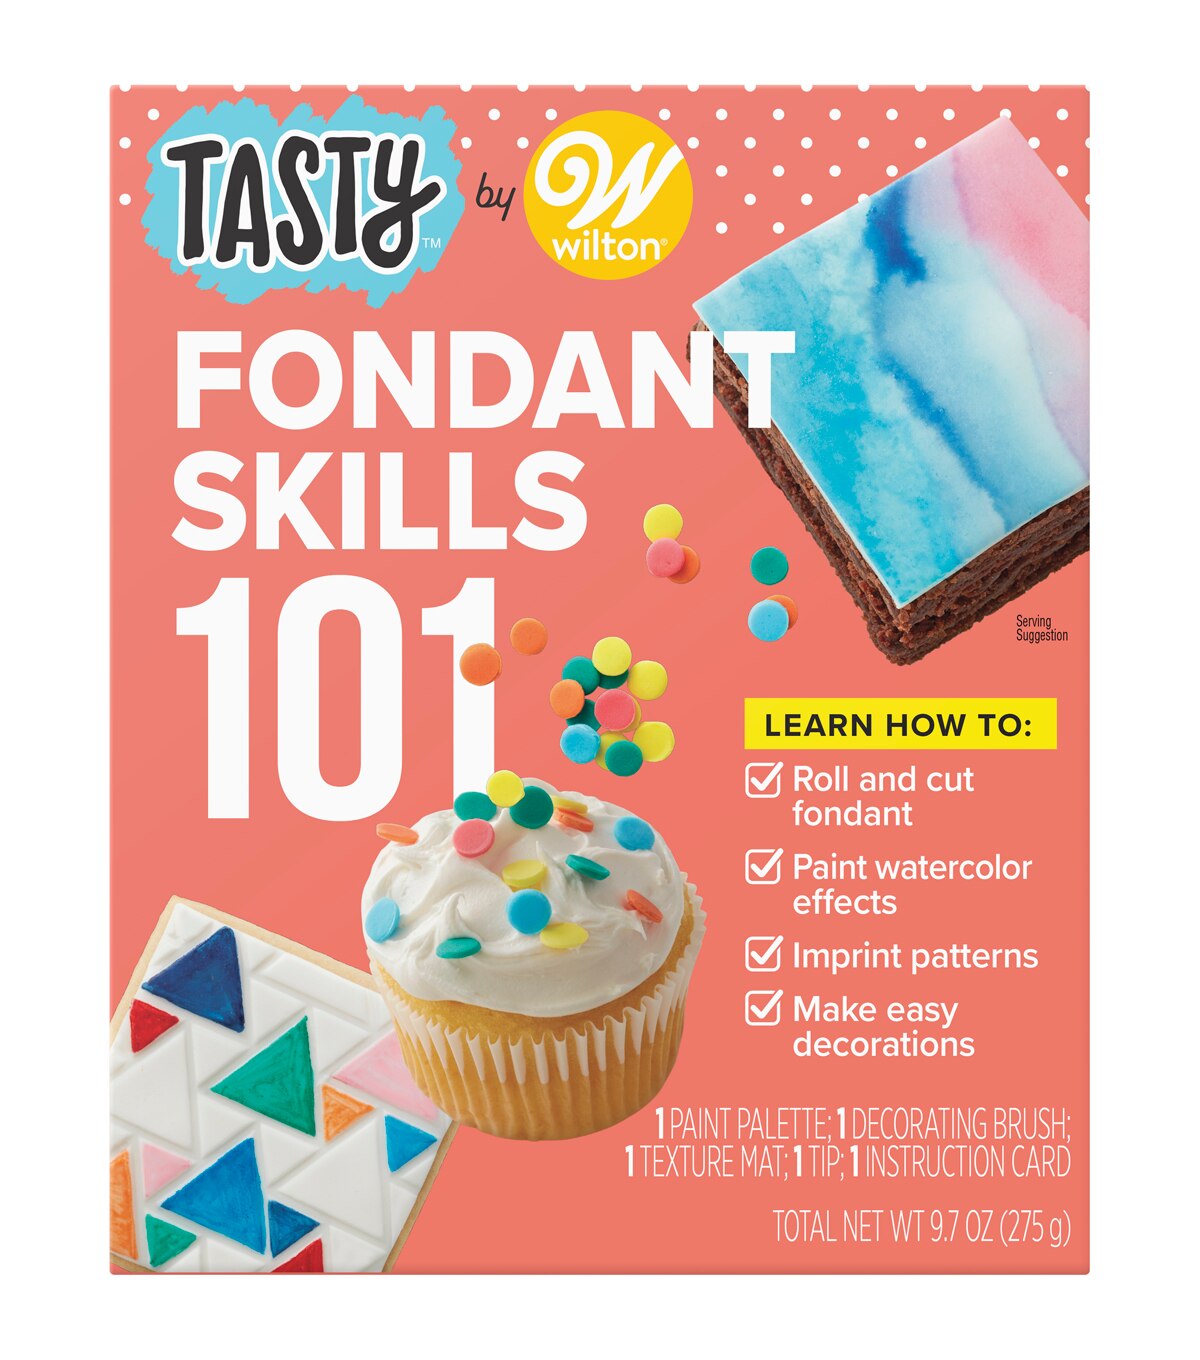 Tasty By Wilton Fondant Skills 101 Kit Joann